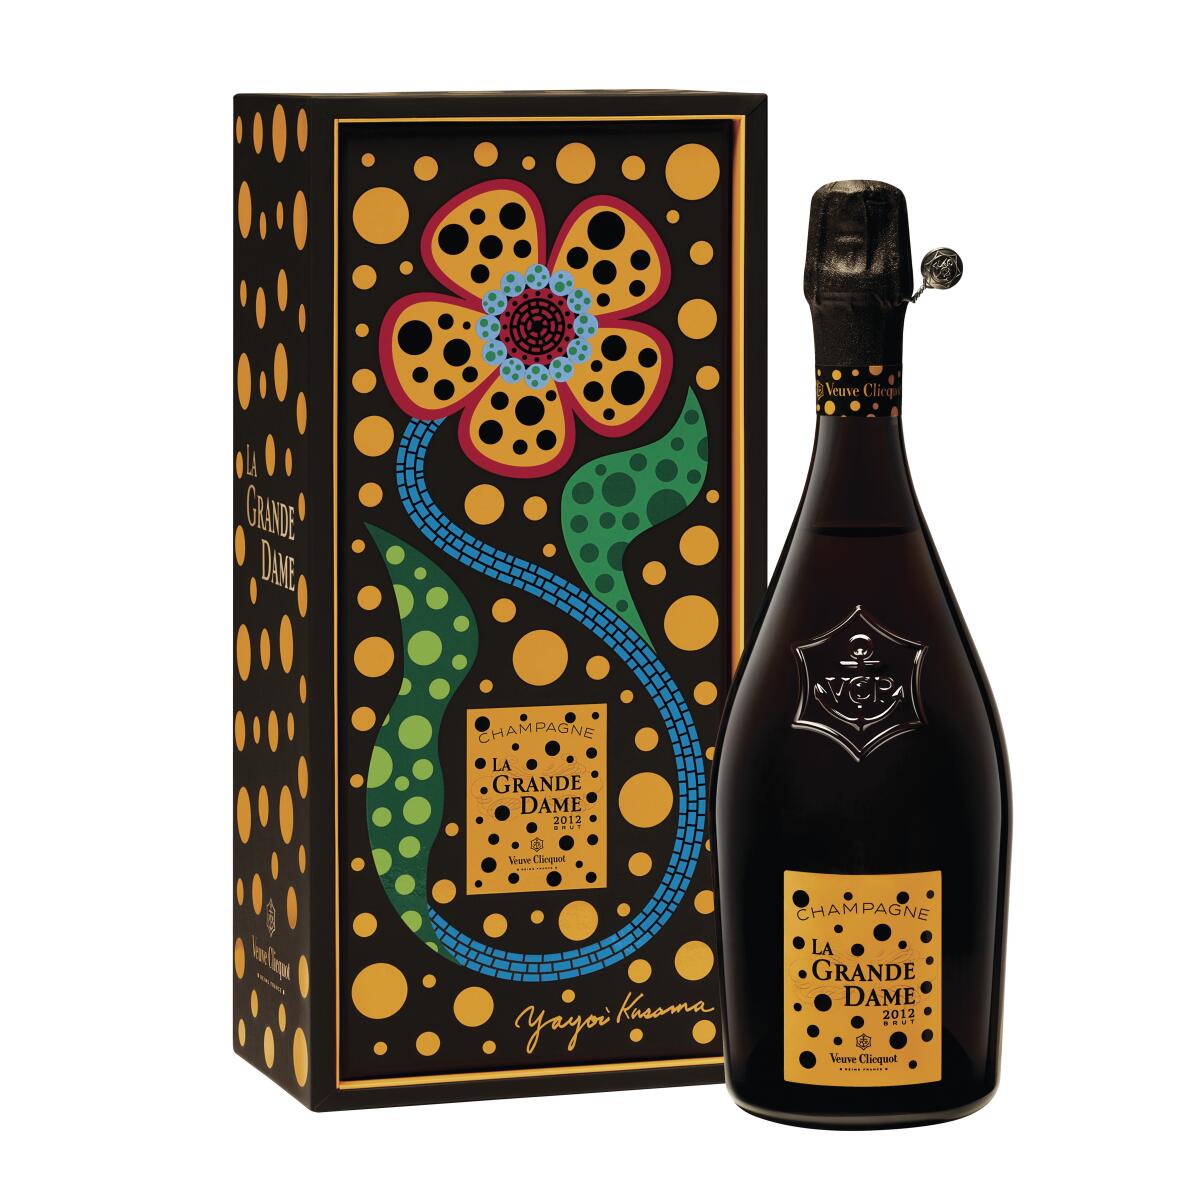 A photo of the gift box for Veuve Clicquot's newest vintage La Grande Dame 2012 Champagne.